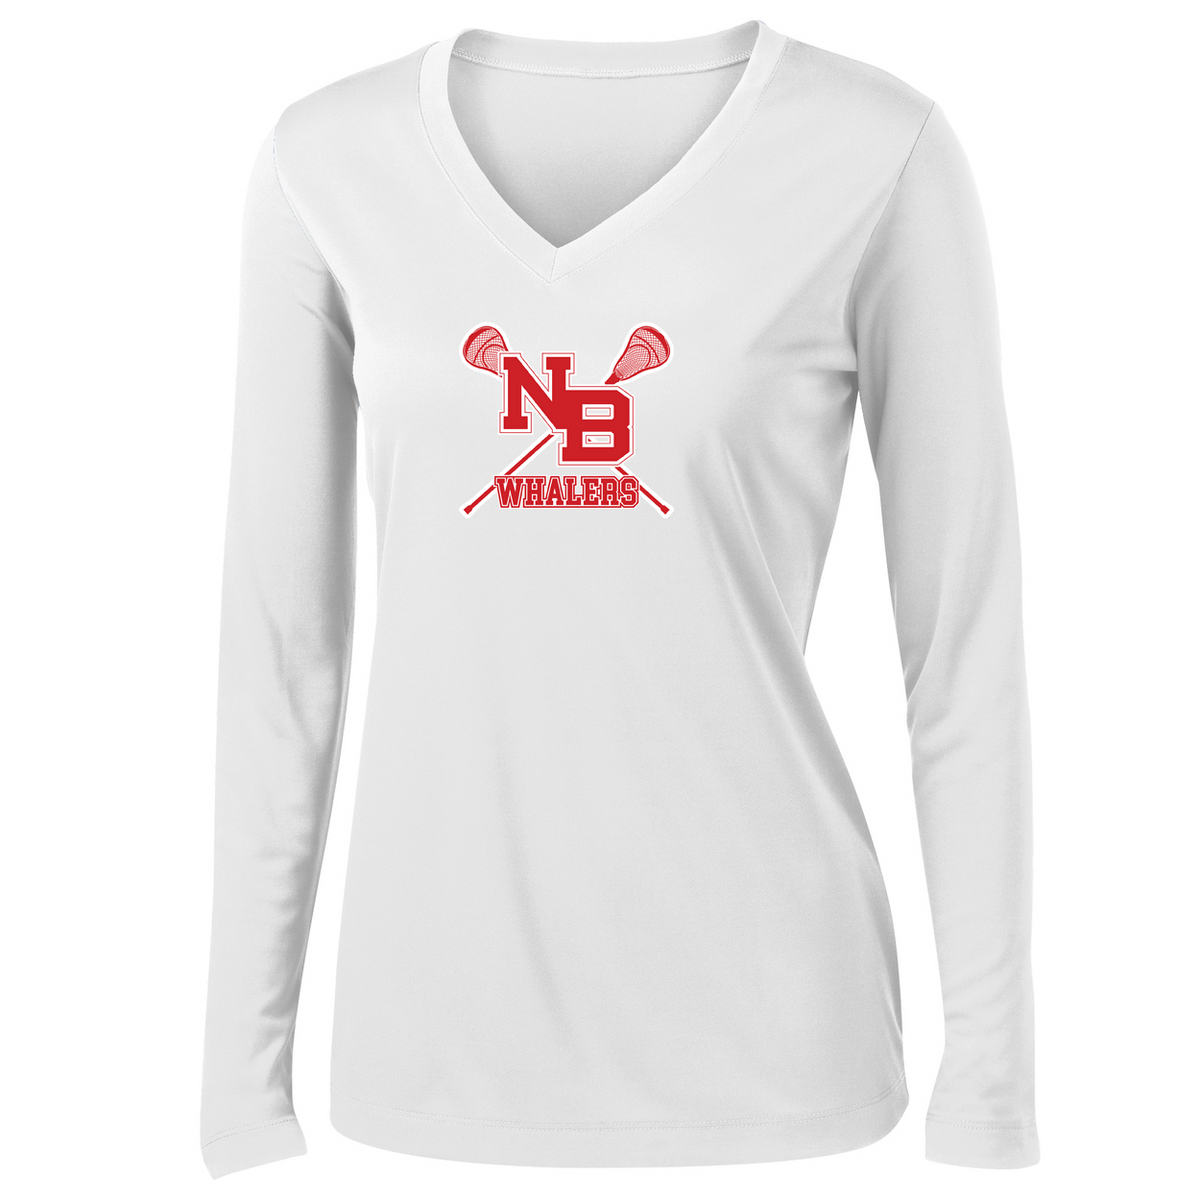 New Bedford Lacrosse Women's Long Sleeve Performance Shirt